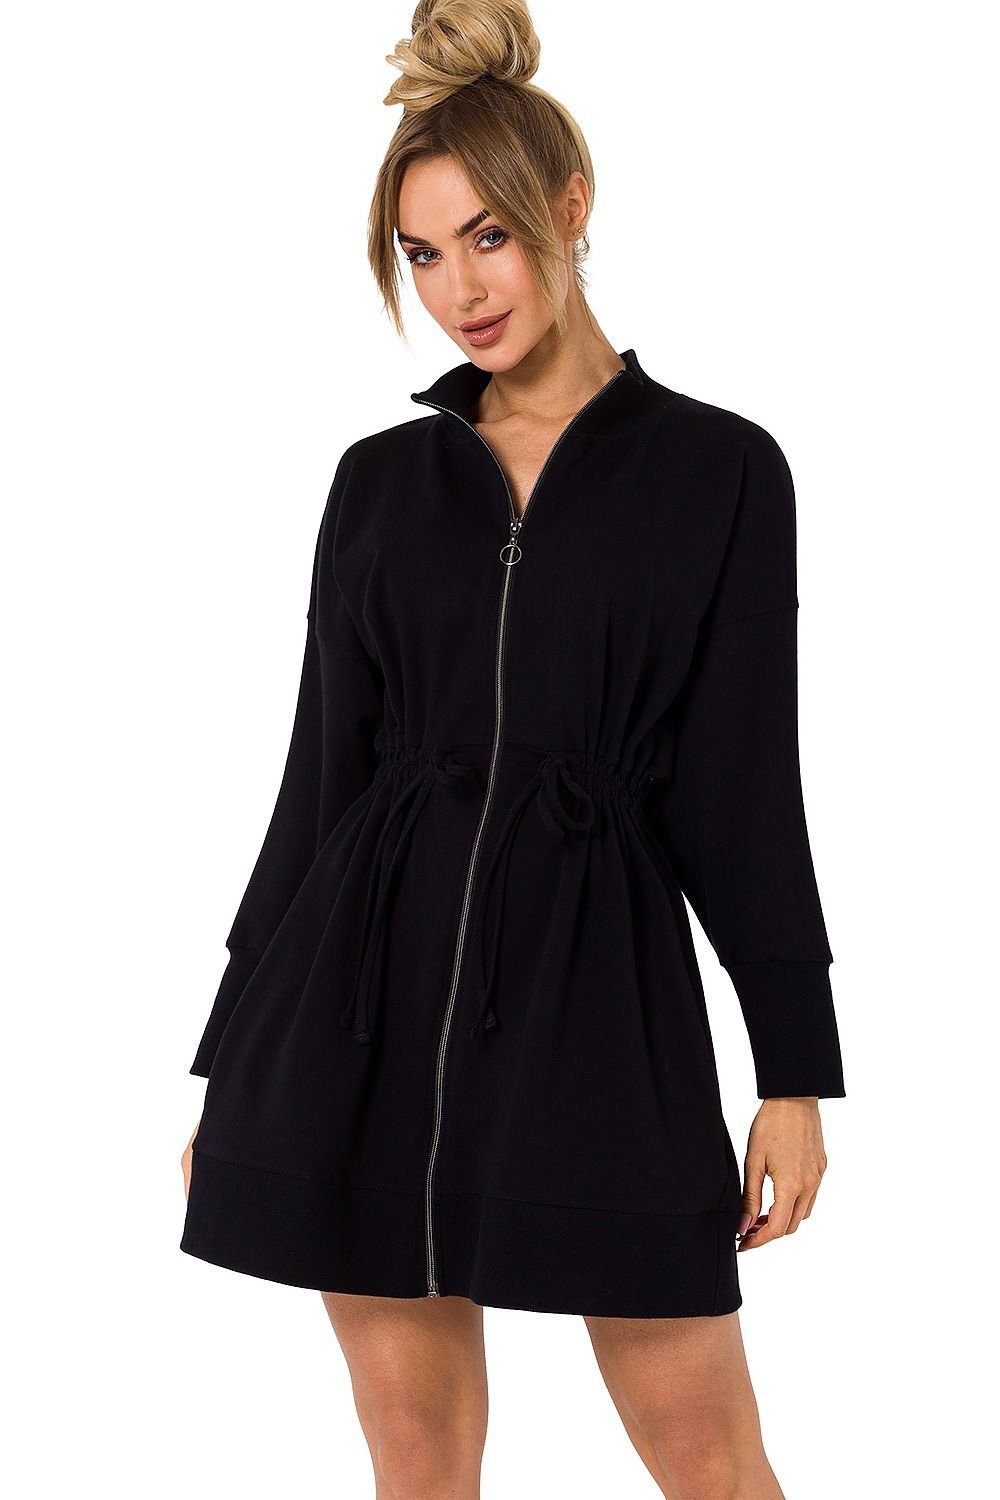 TEEK - Zip Sweatshirt Lace Back Dress DRESS TEEK MH black 2XL/3XL 